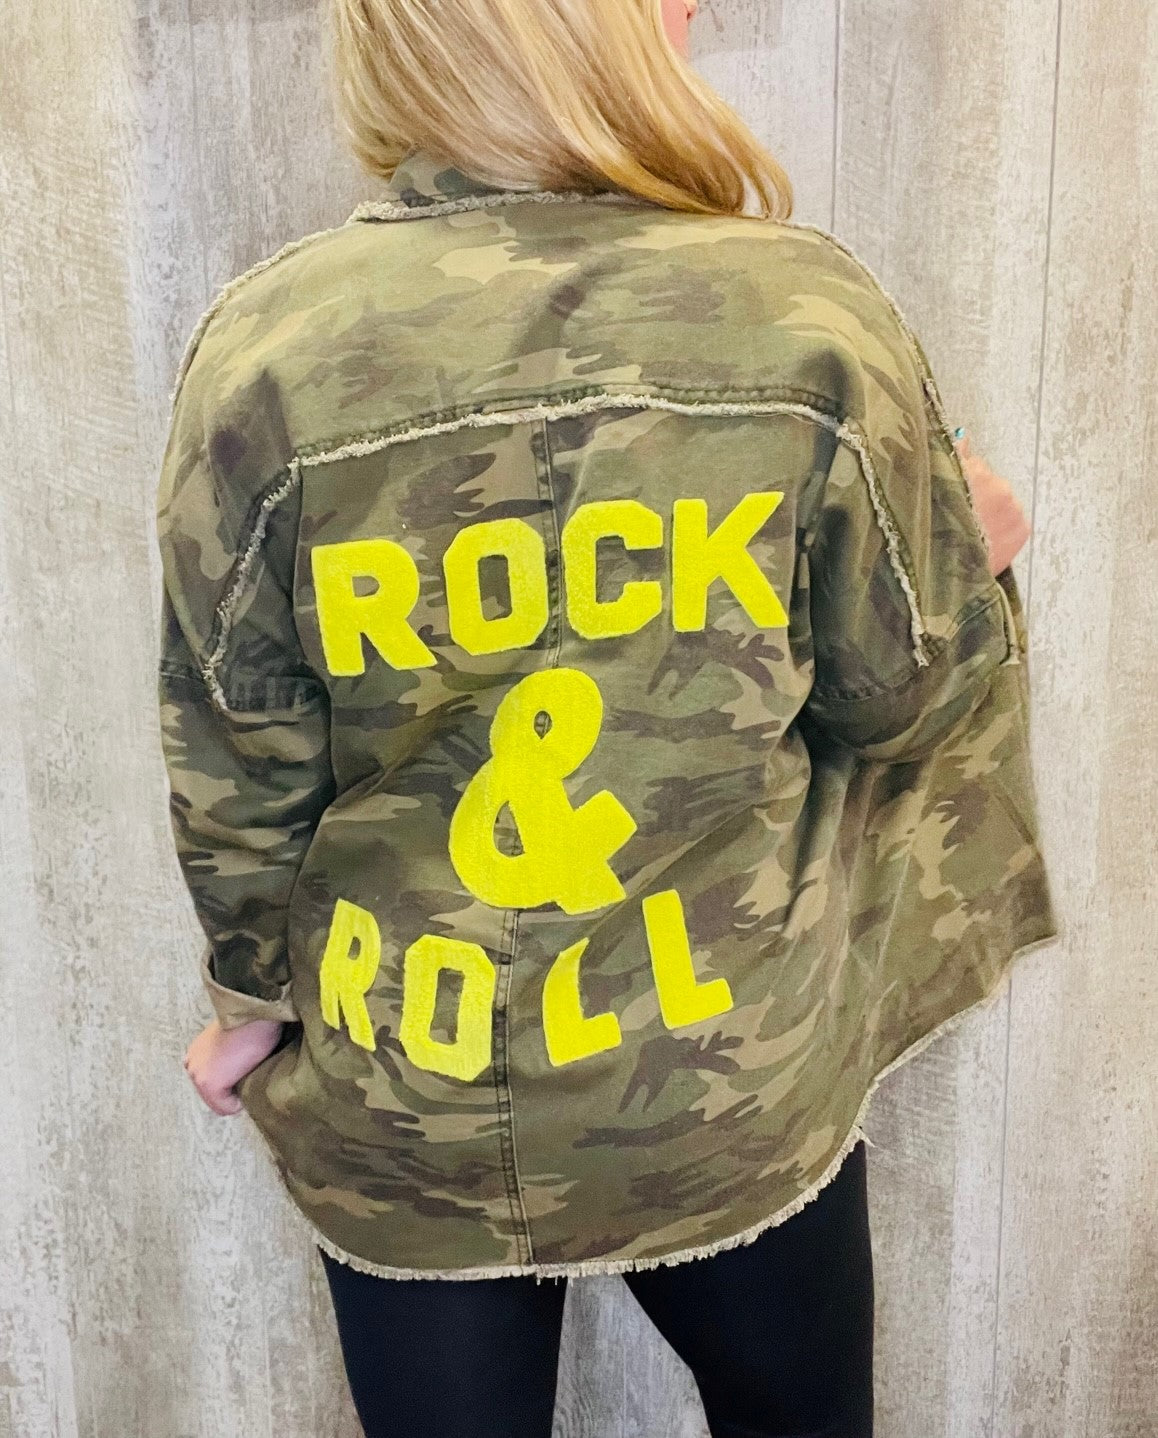 Army Print Jacket w/ Rock & Roll has Pockets